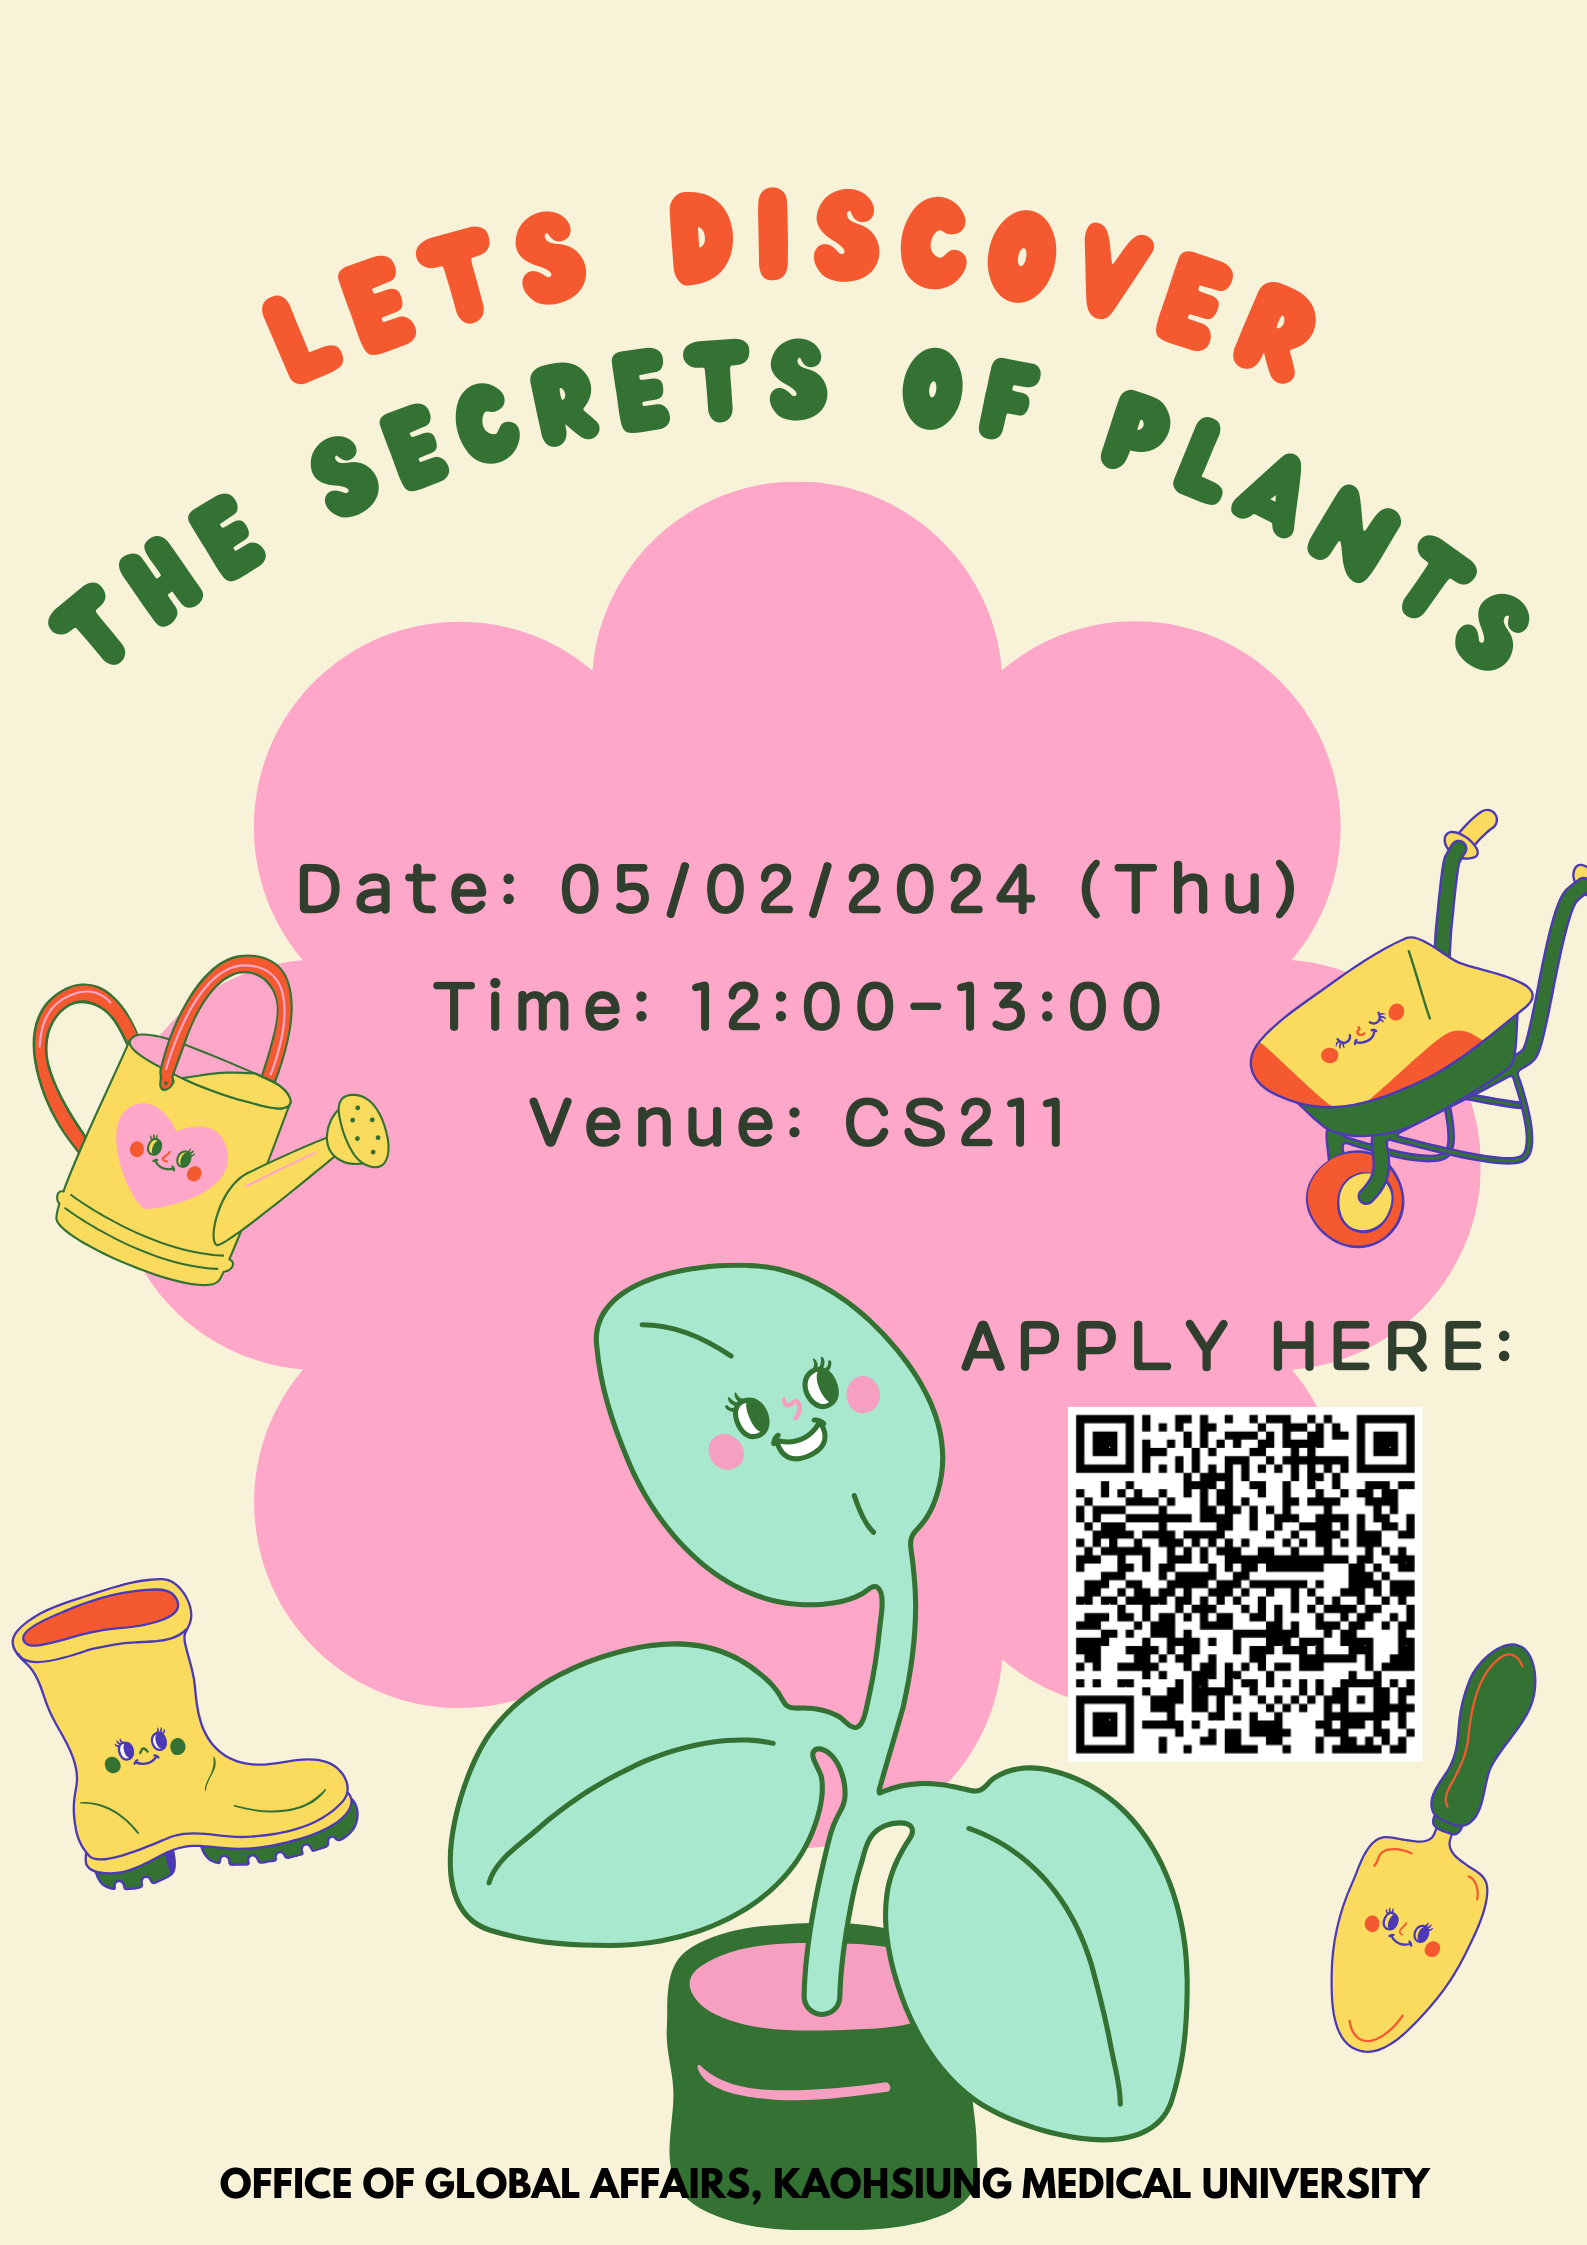 Lets discover the secrets of plants